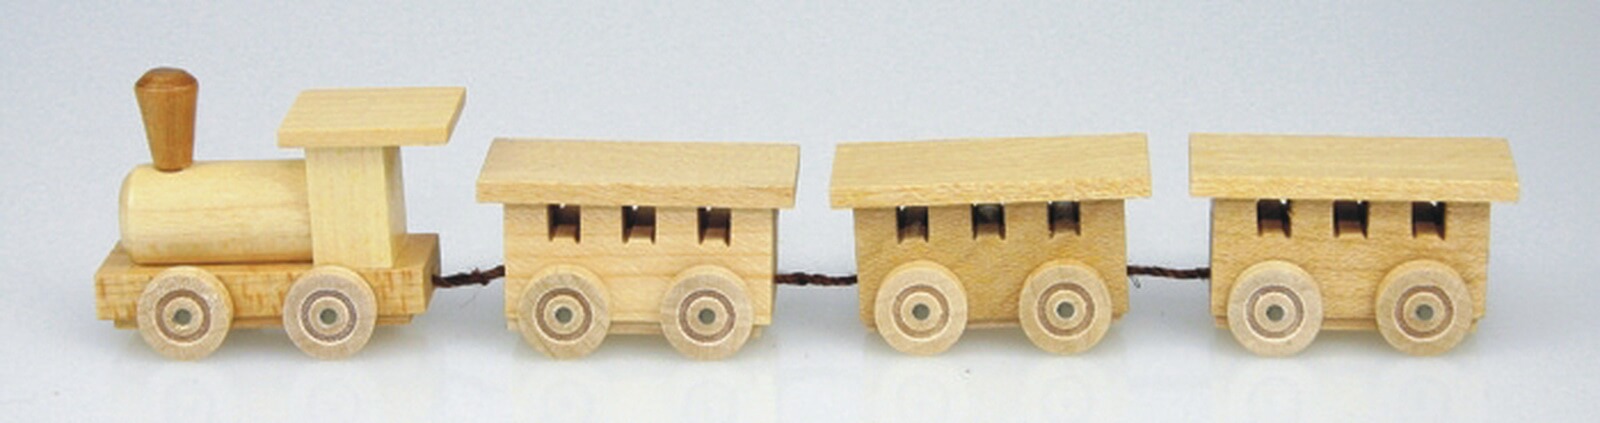 Mini - Holzeisenbahn, natur von Stephan Kaden